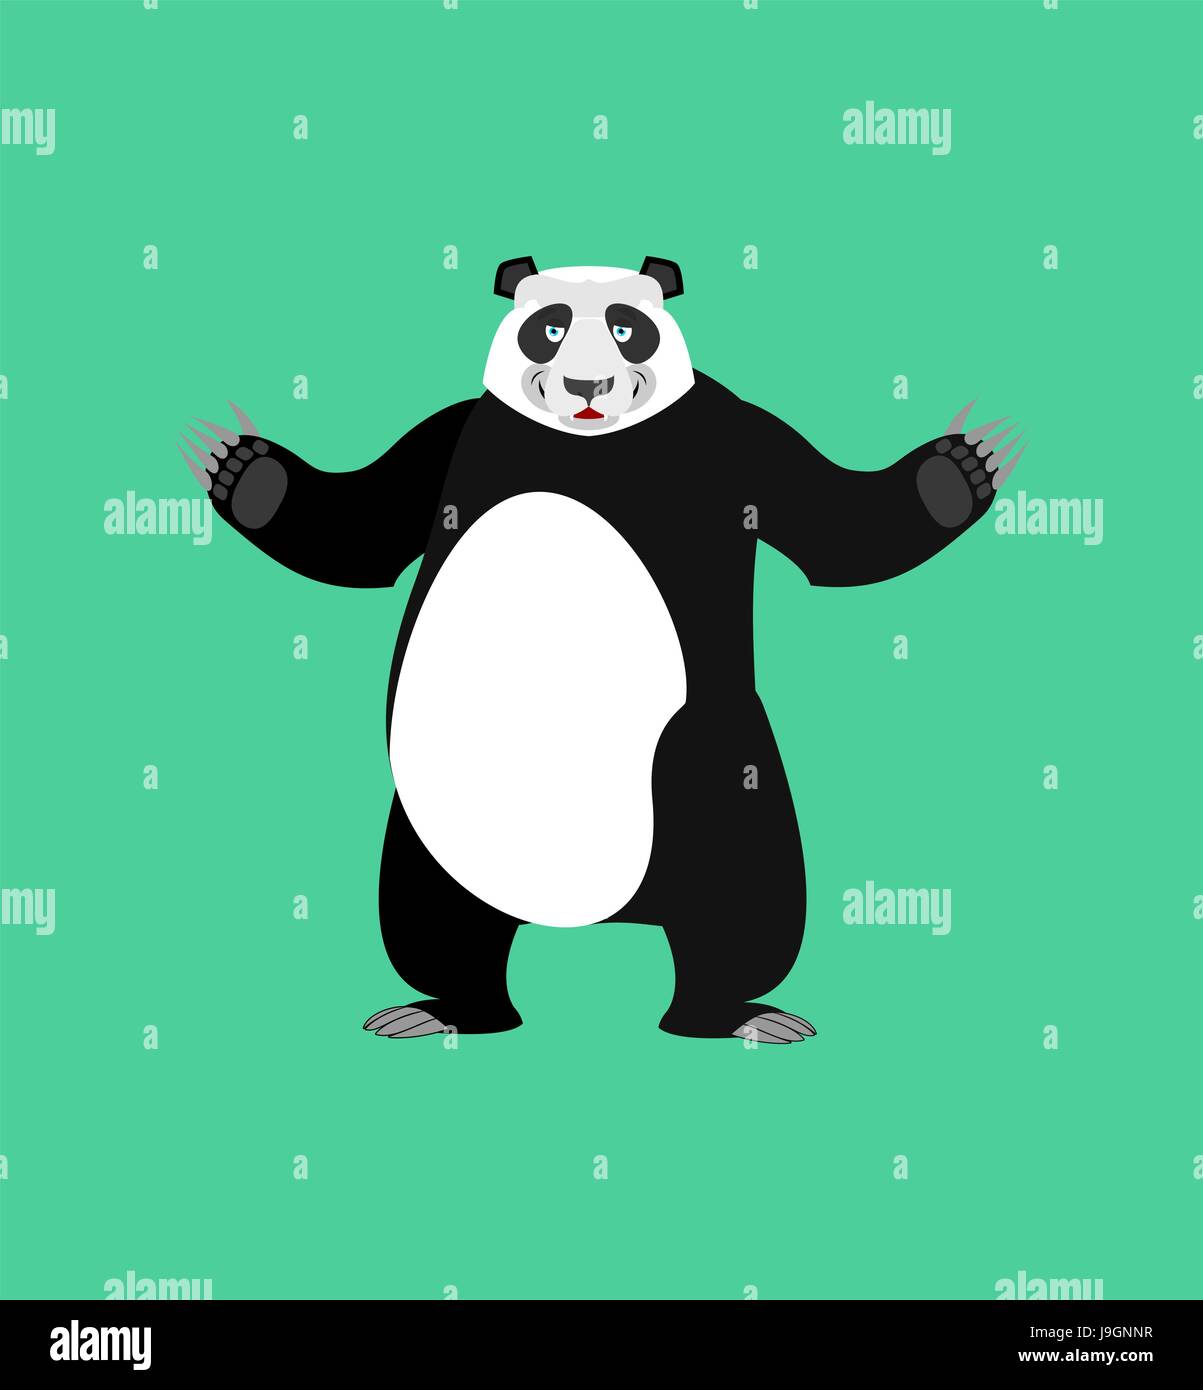 Panda Happy Emoji. Chinese bear merry emotion isolated Stock Vector